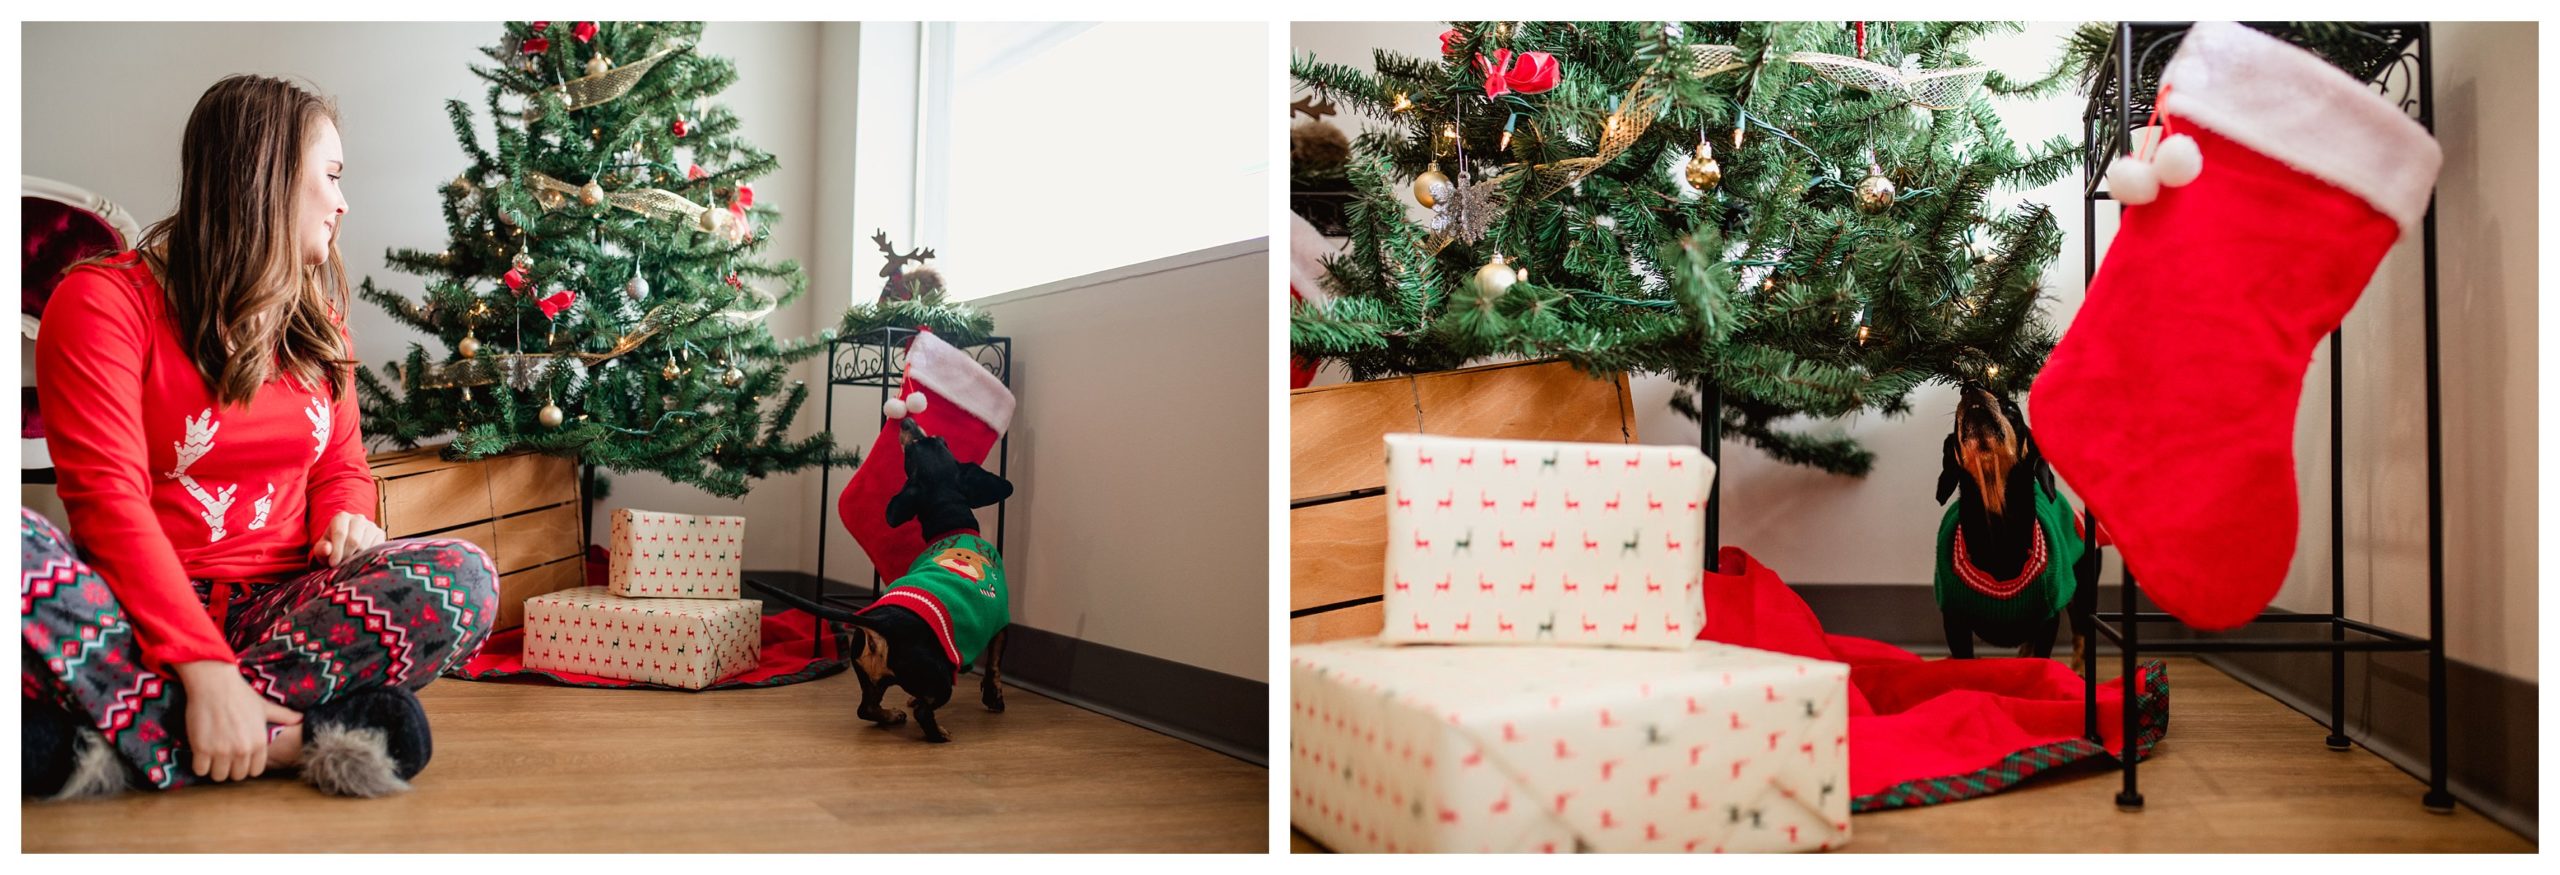 Lifestyle christmas dog photos session with Christmas tree